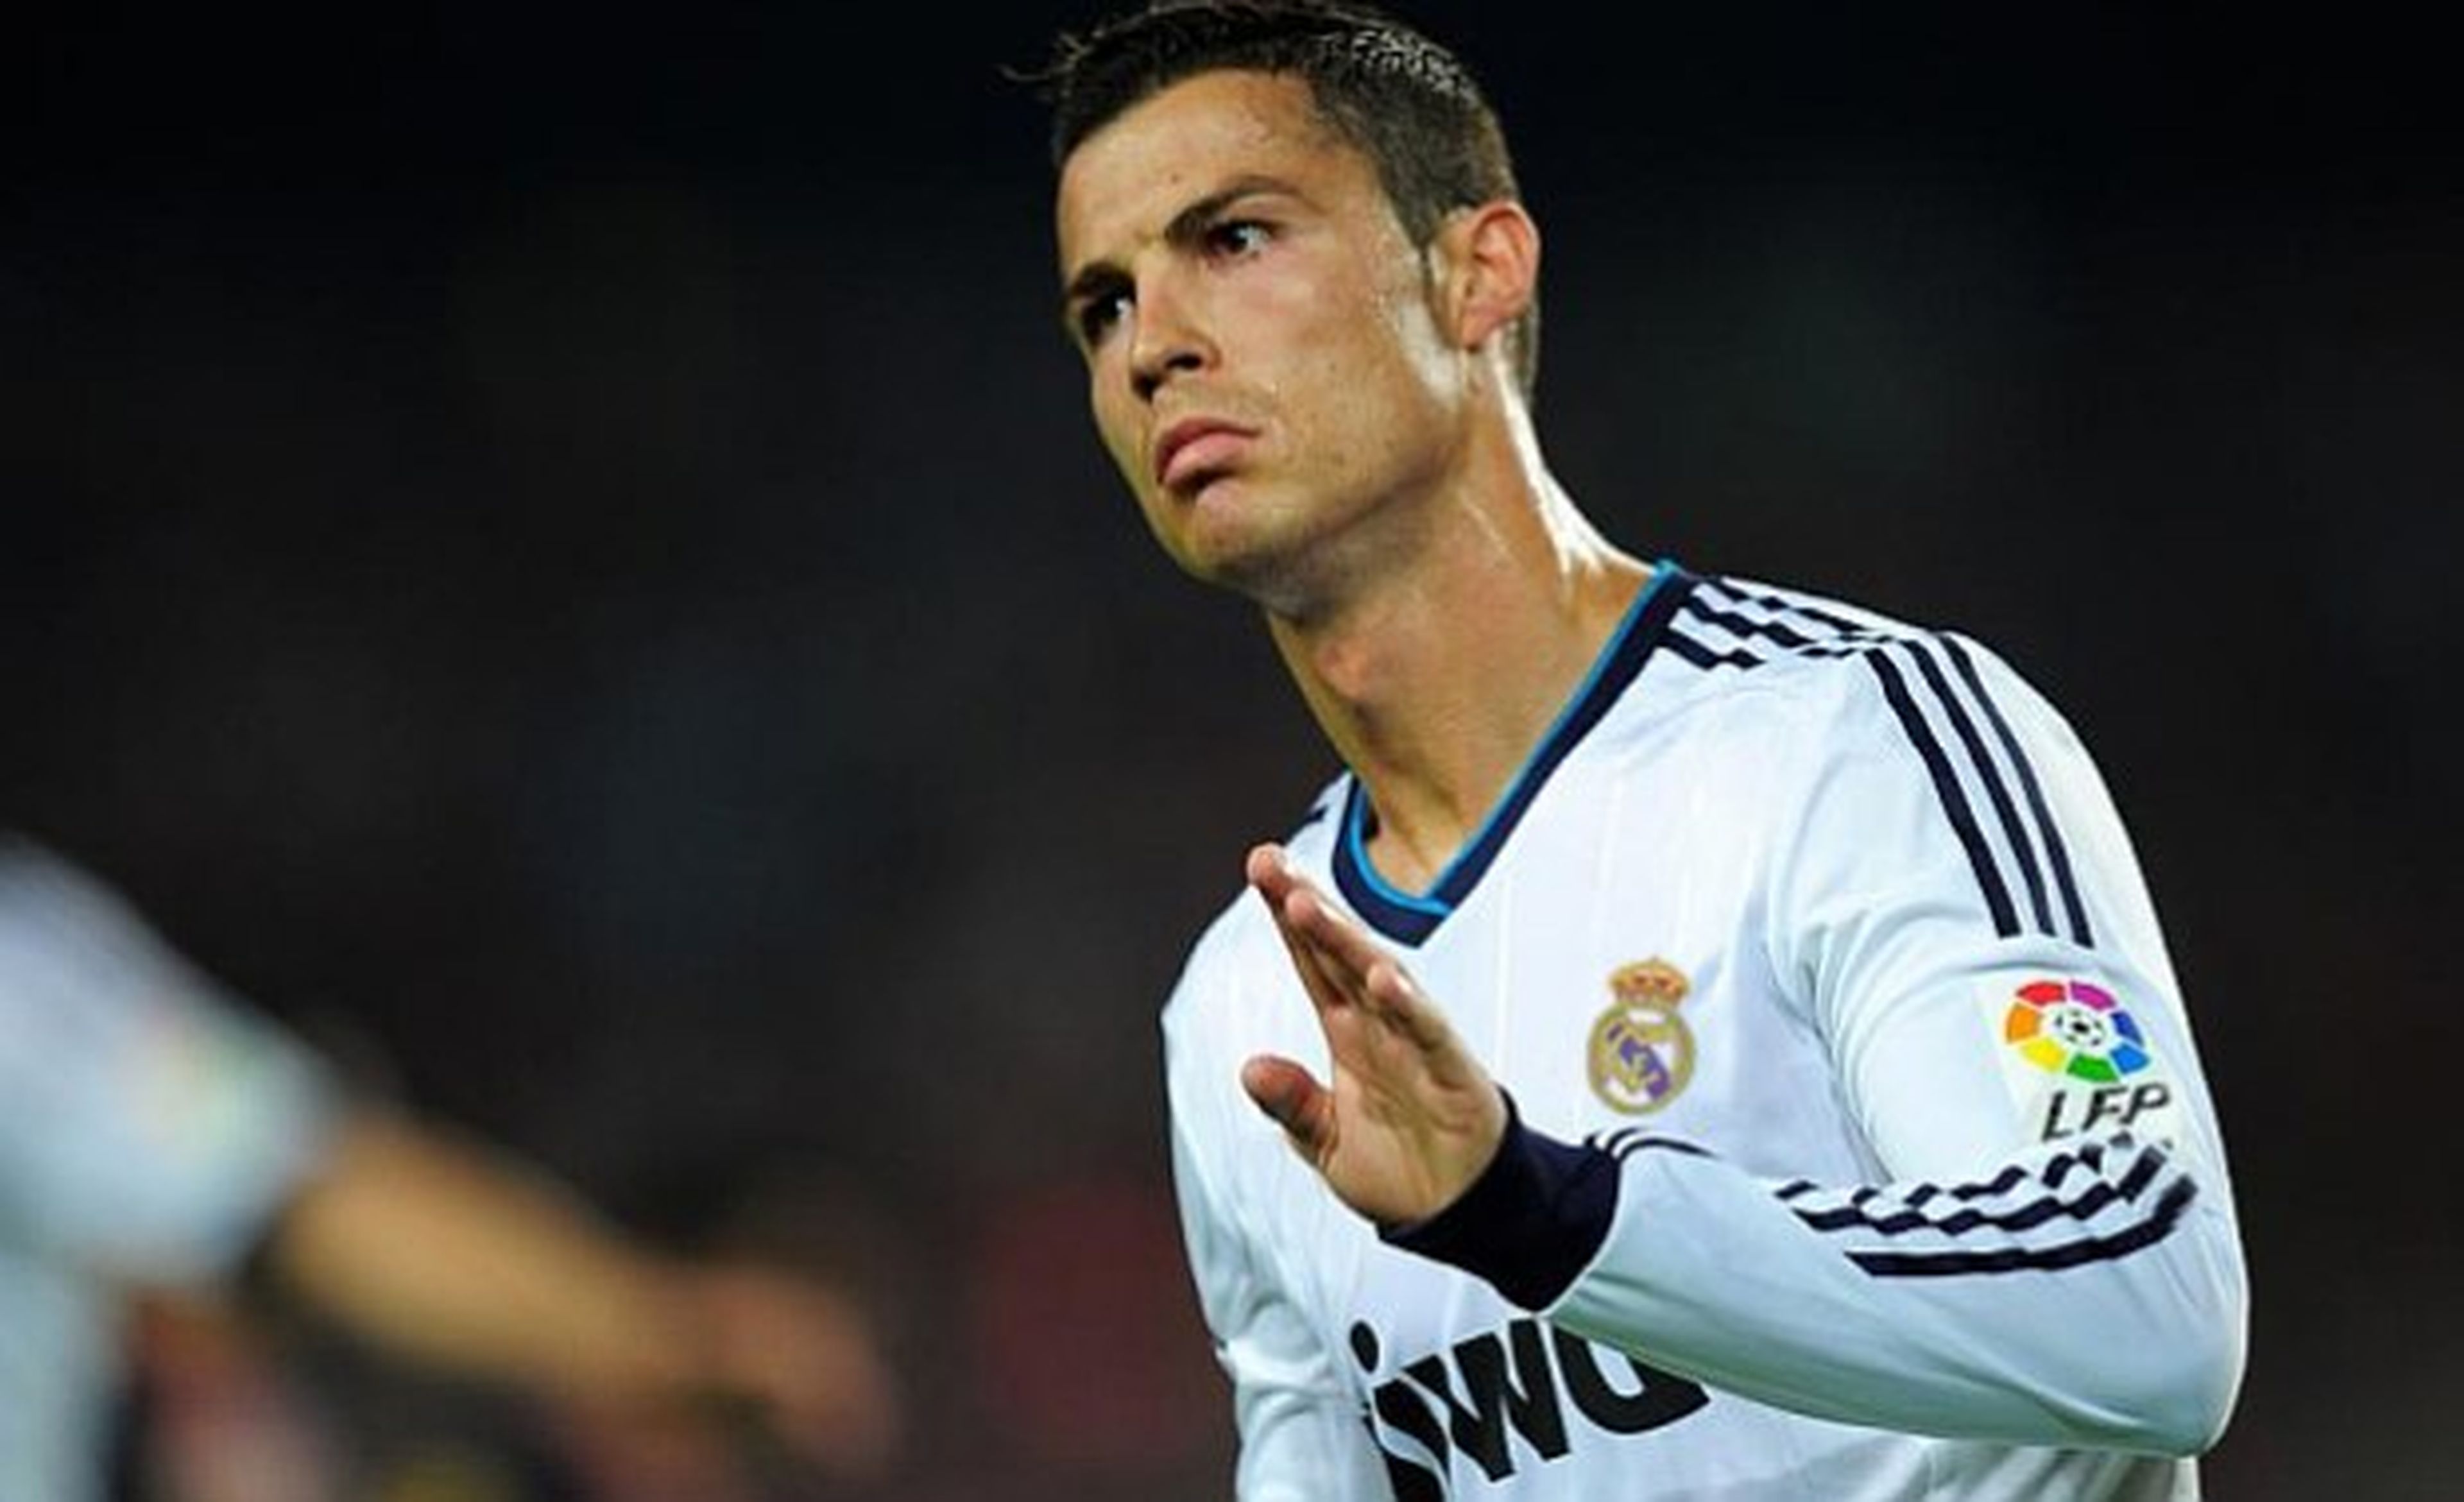 Cristiano Ronaldo lanza su propia red social: Viva Ronaldo.